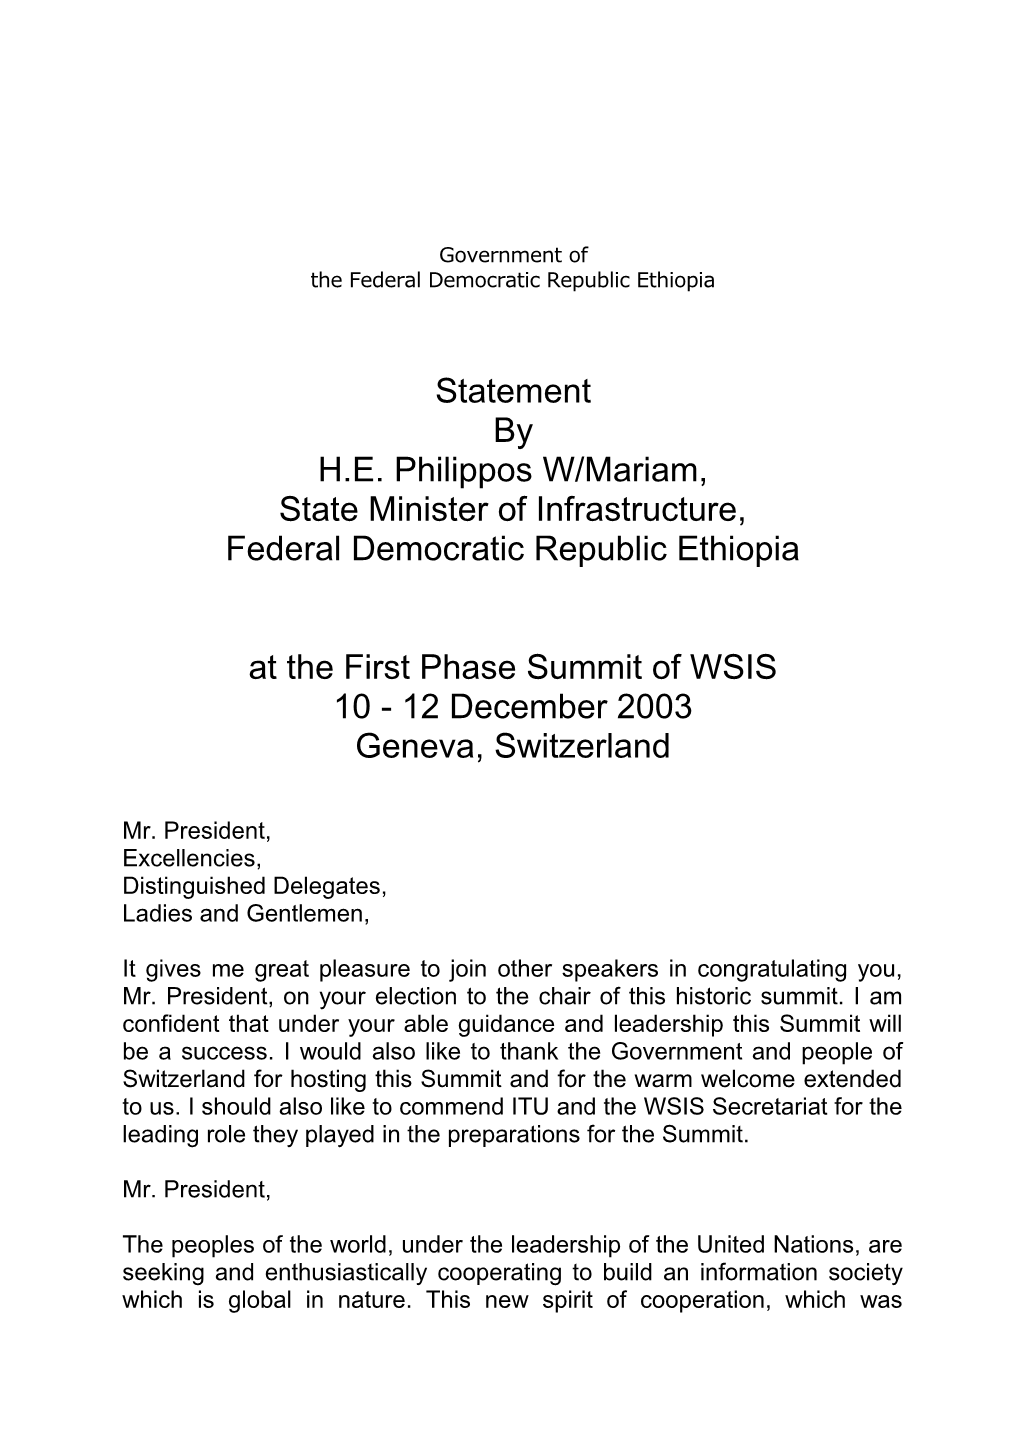 Government of the Federal Democratic Republic Ethiopia